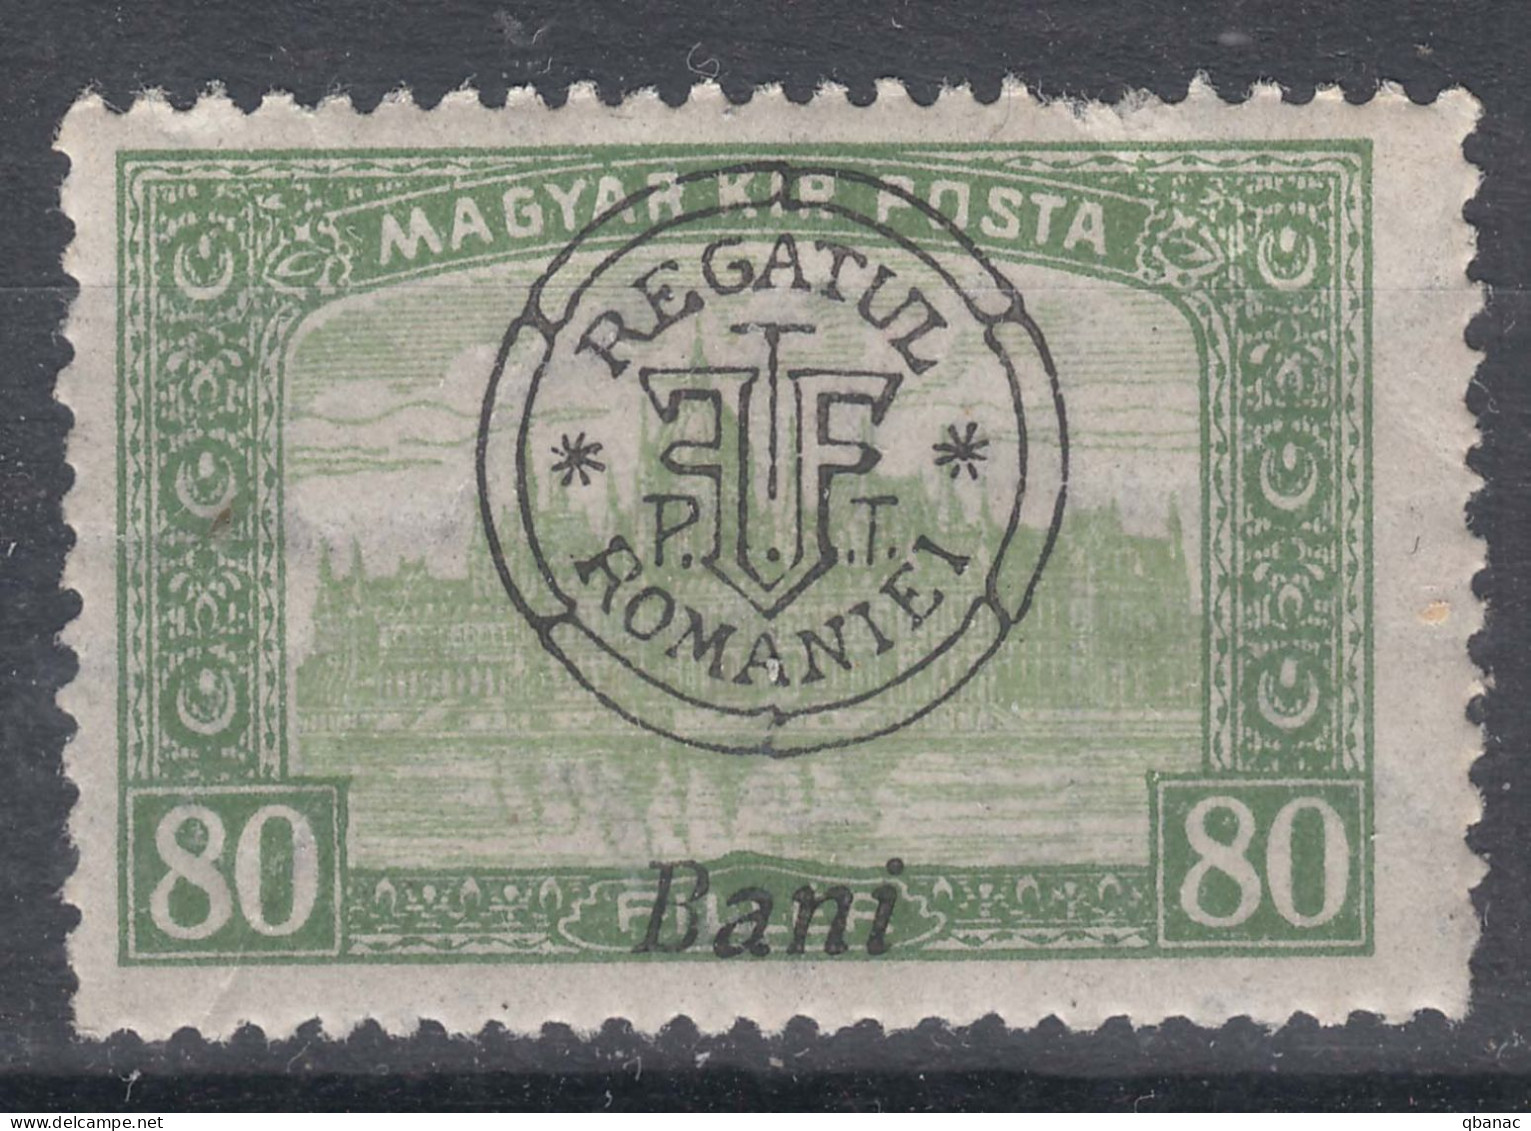 Romania Overprint On Hungary Stamps Occupation Transylvania 1919 Mi#39 II Mint Never Hinged - Transylvania